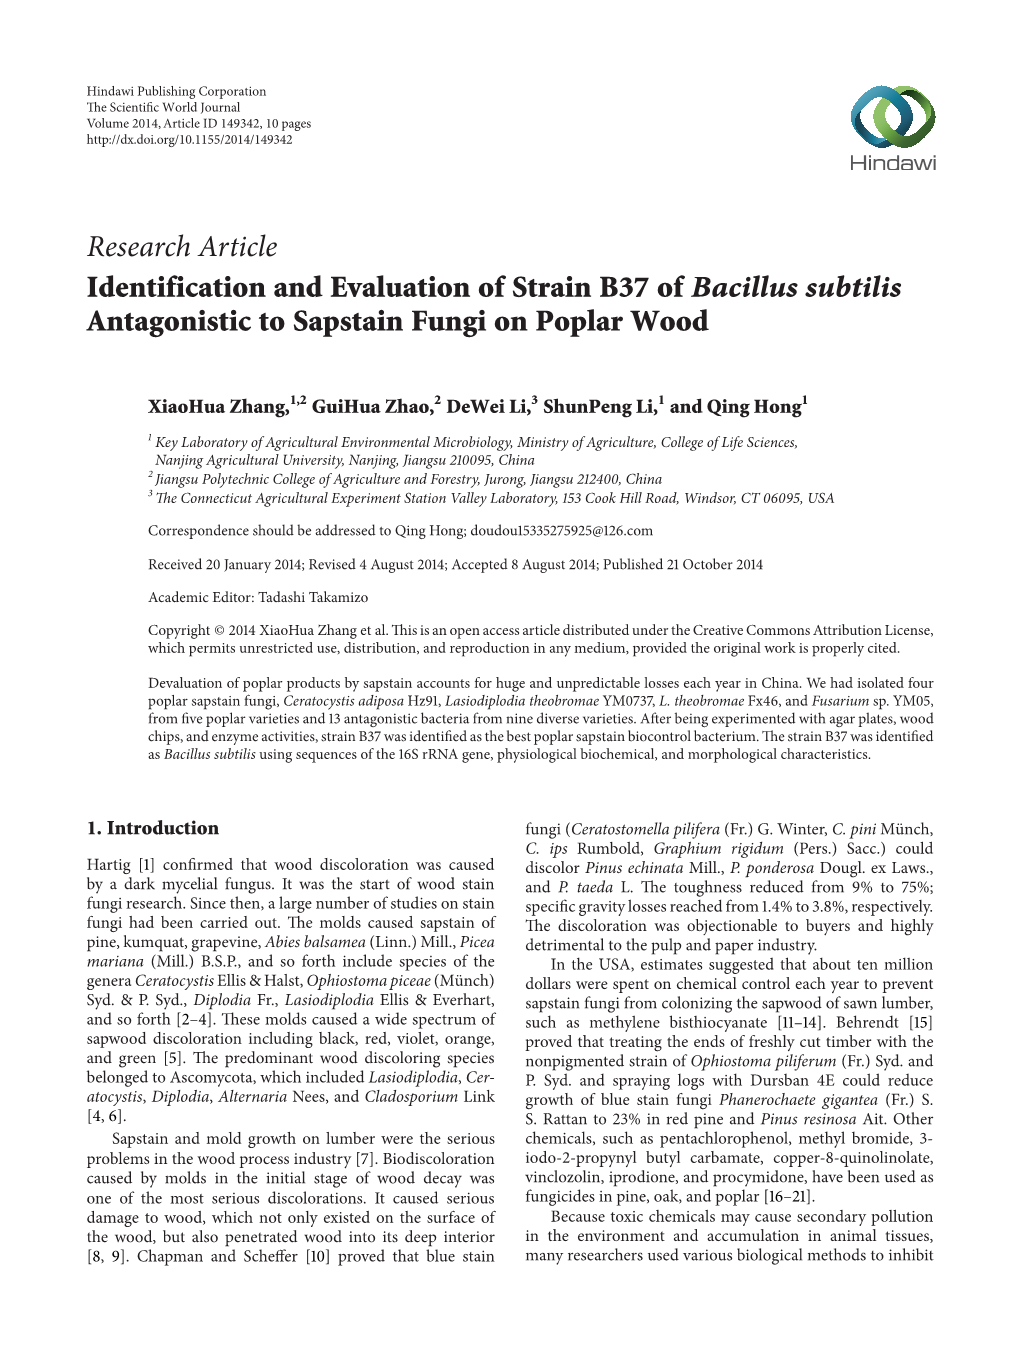 Identification and Evaluation of Strain B37 of Bacillus Subtilis Antagonistic to Sapstain Fungi on Poplar Wood